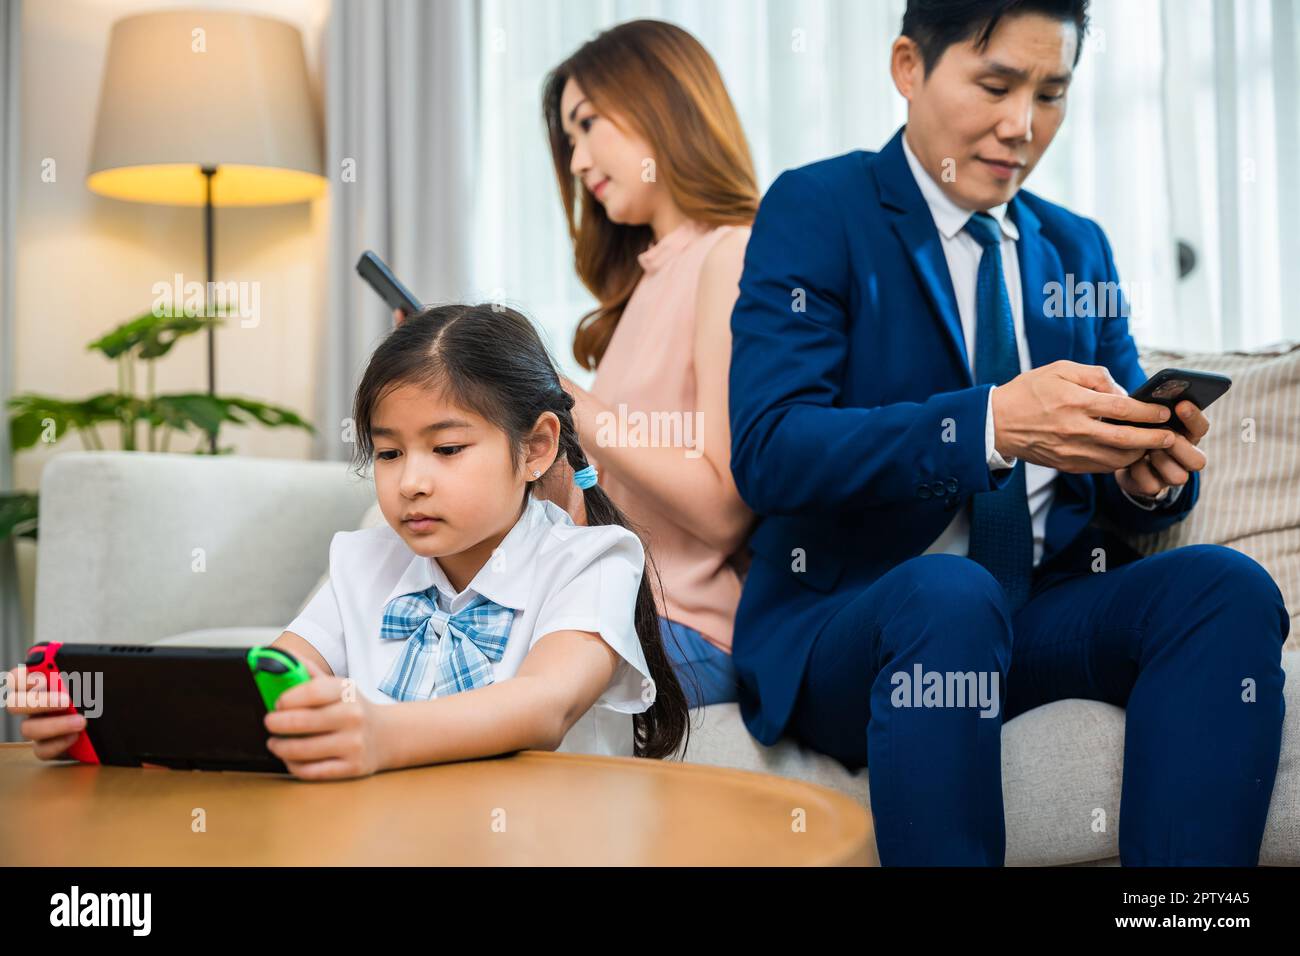 Asian family gadgets Stock Photos, Royalty Free Asian family gadgets Images